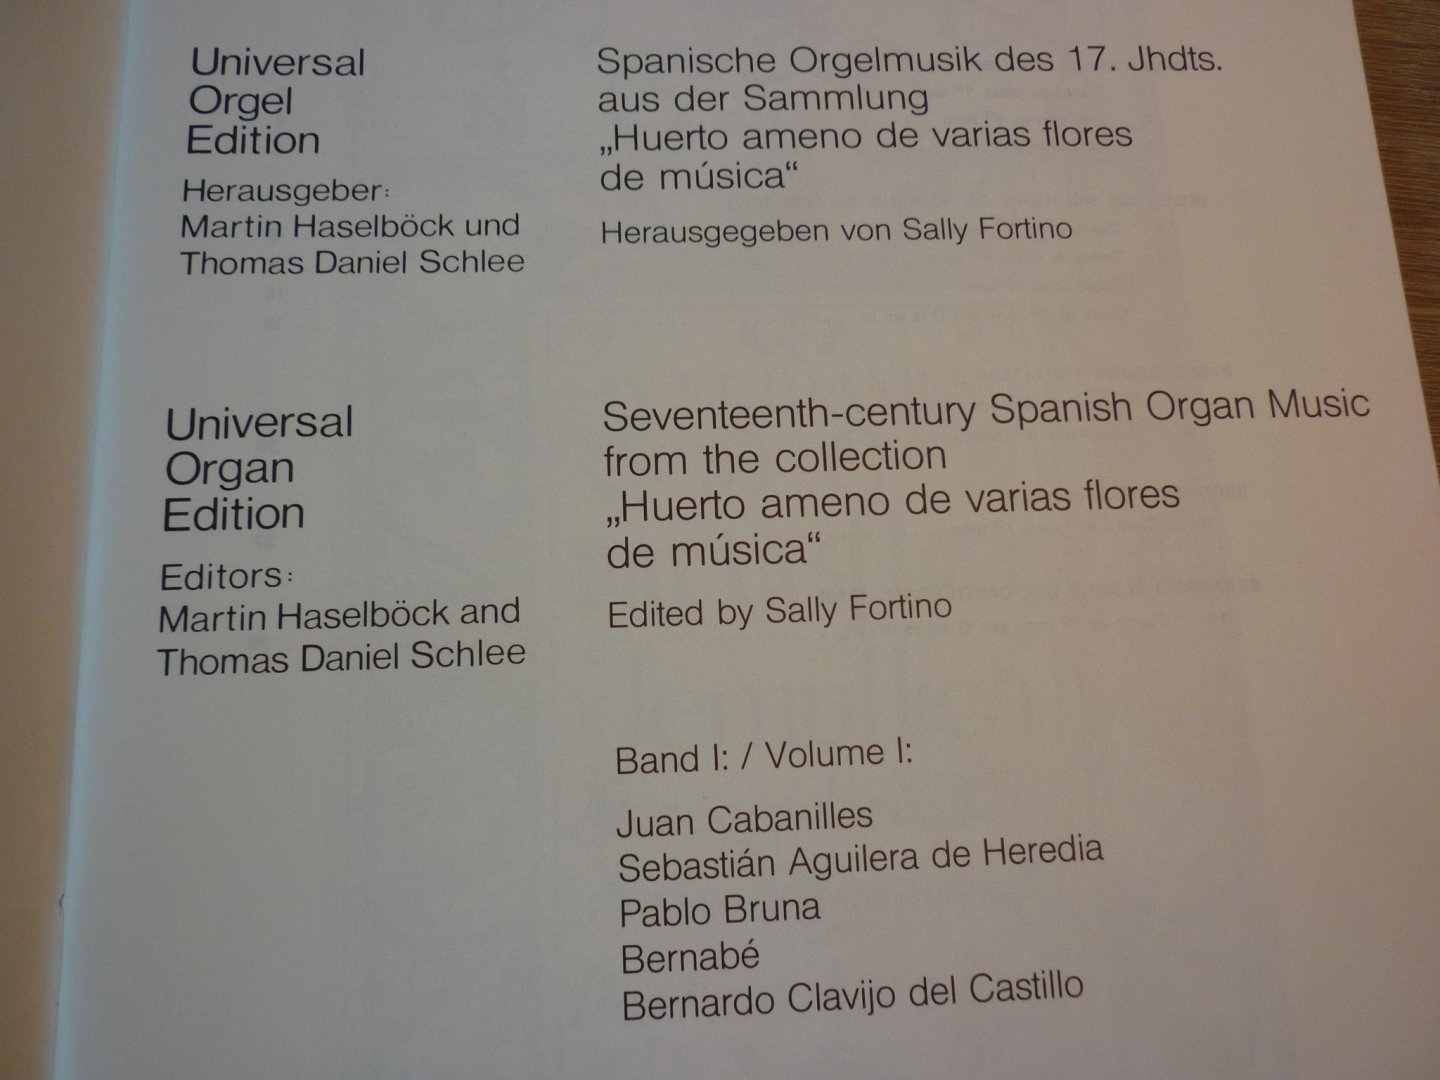 Fortino, Sally (ed.) - Seventeenth Century Spanish Organ Music from "Huerto ameno de varias flores de musica" - Volume I